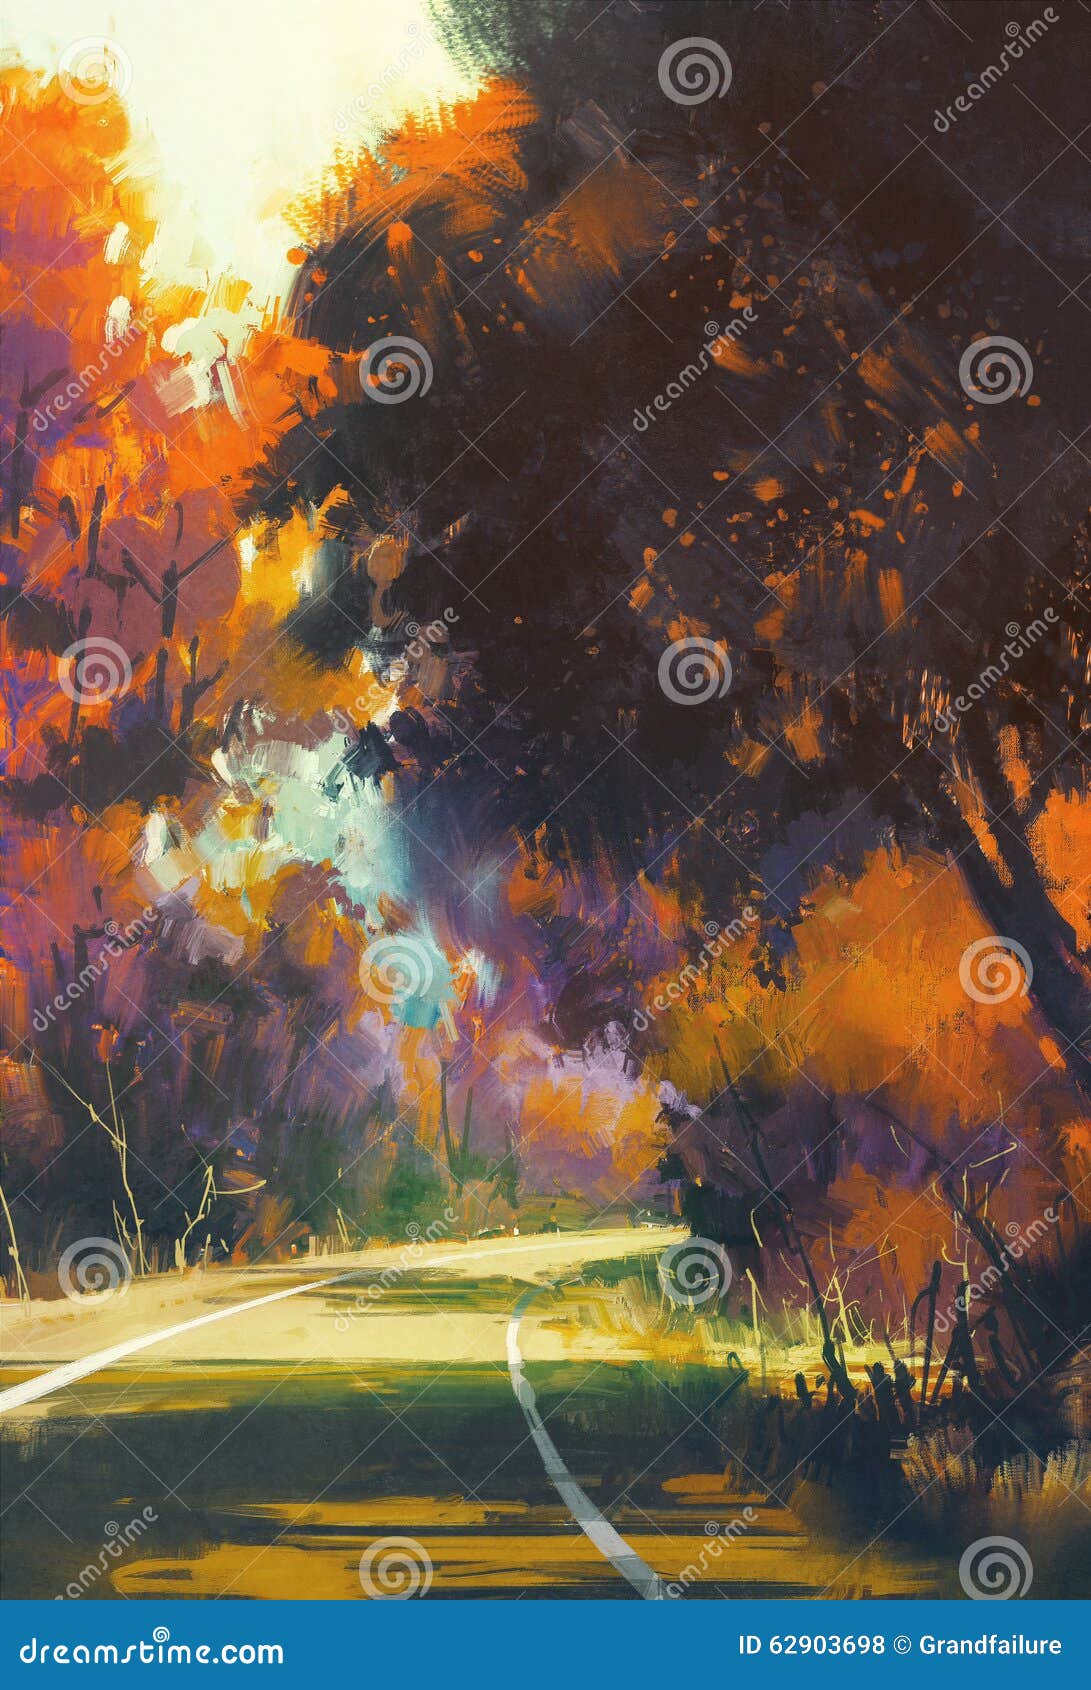 Road in autumn forest stock illustration. Illustration of wallpaper ...